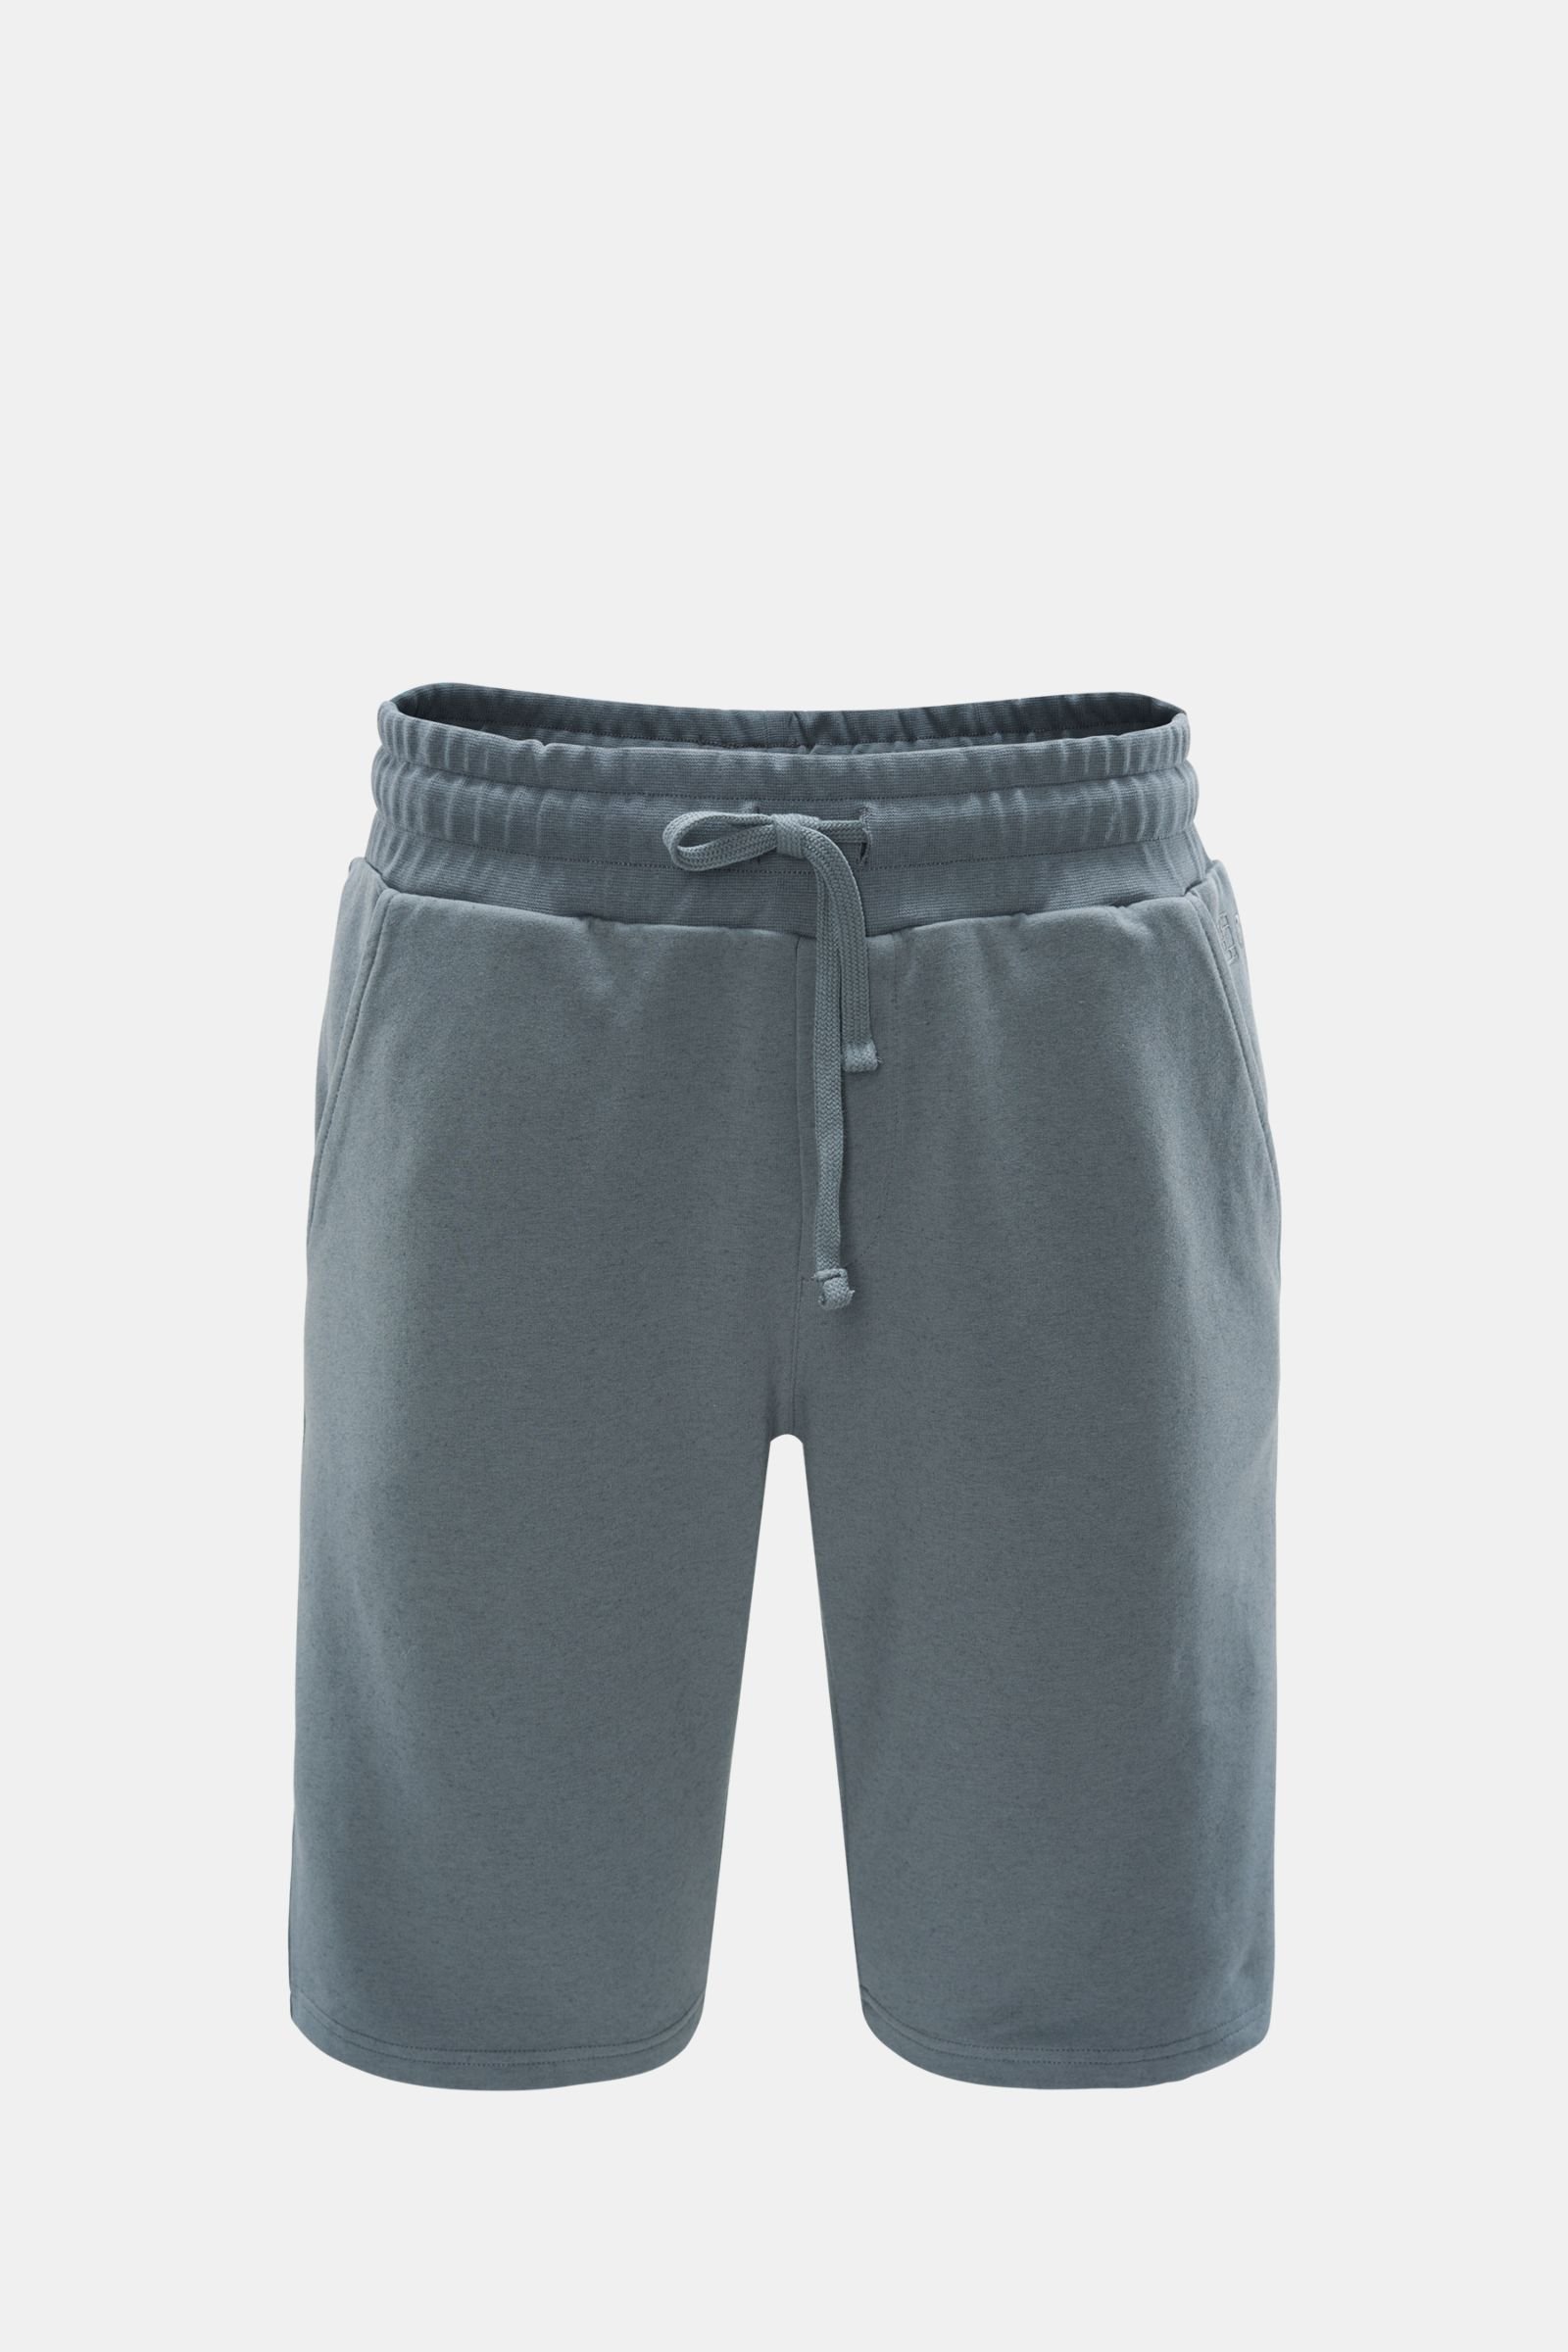 Sweat shorts grey-blue